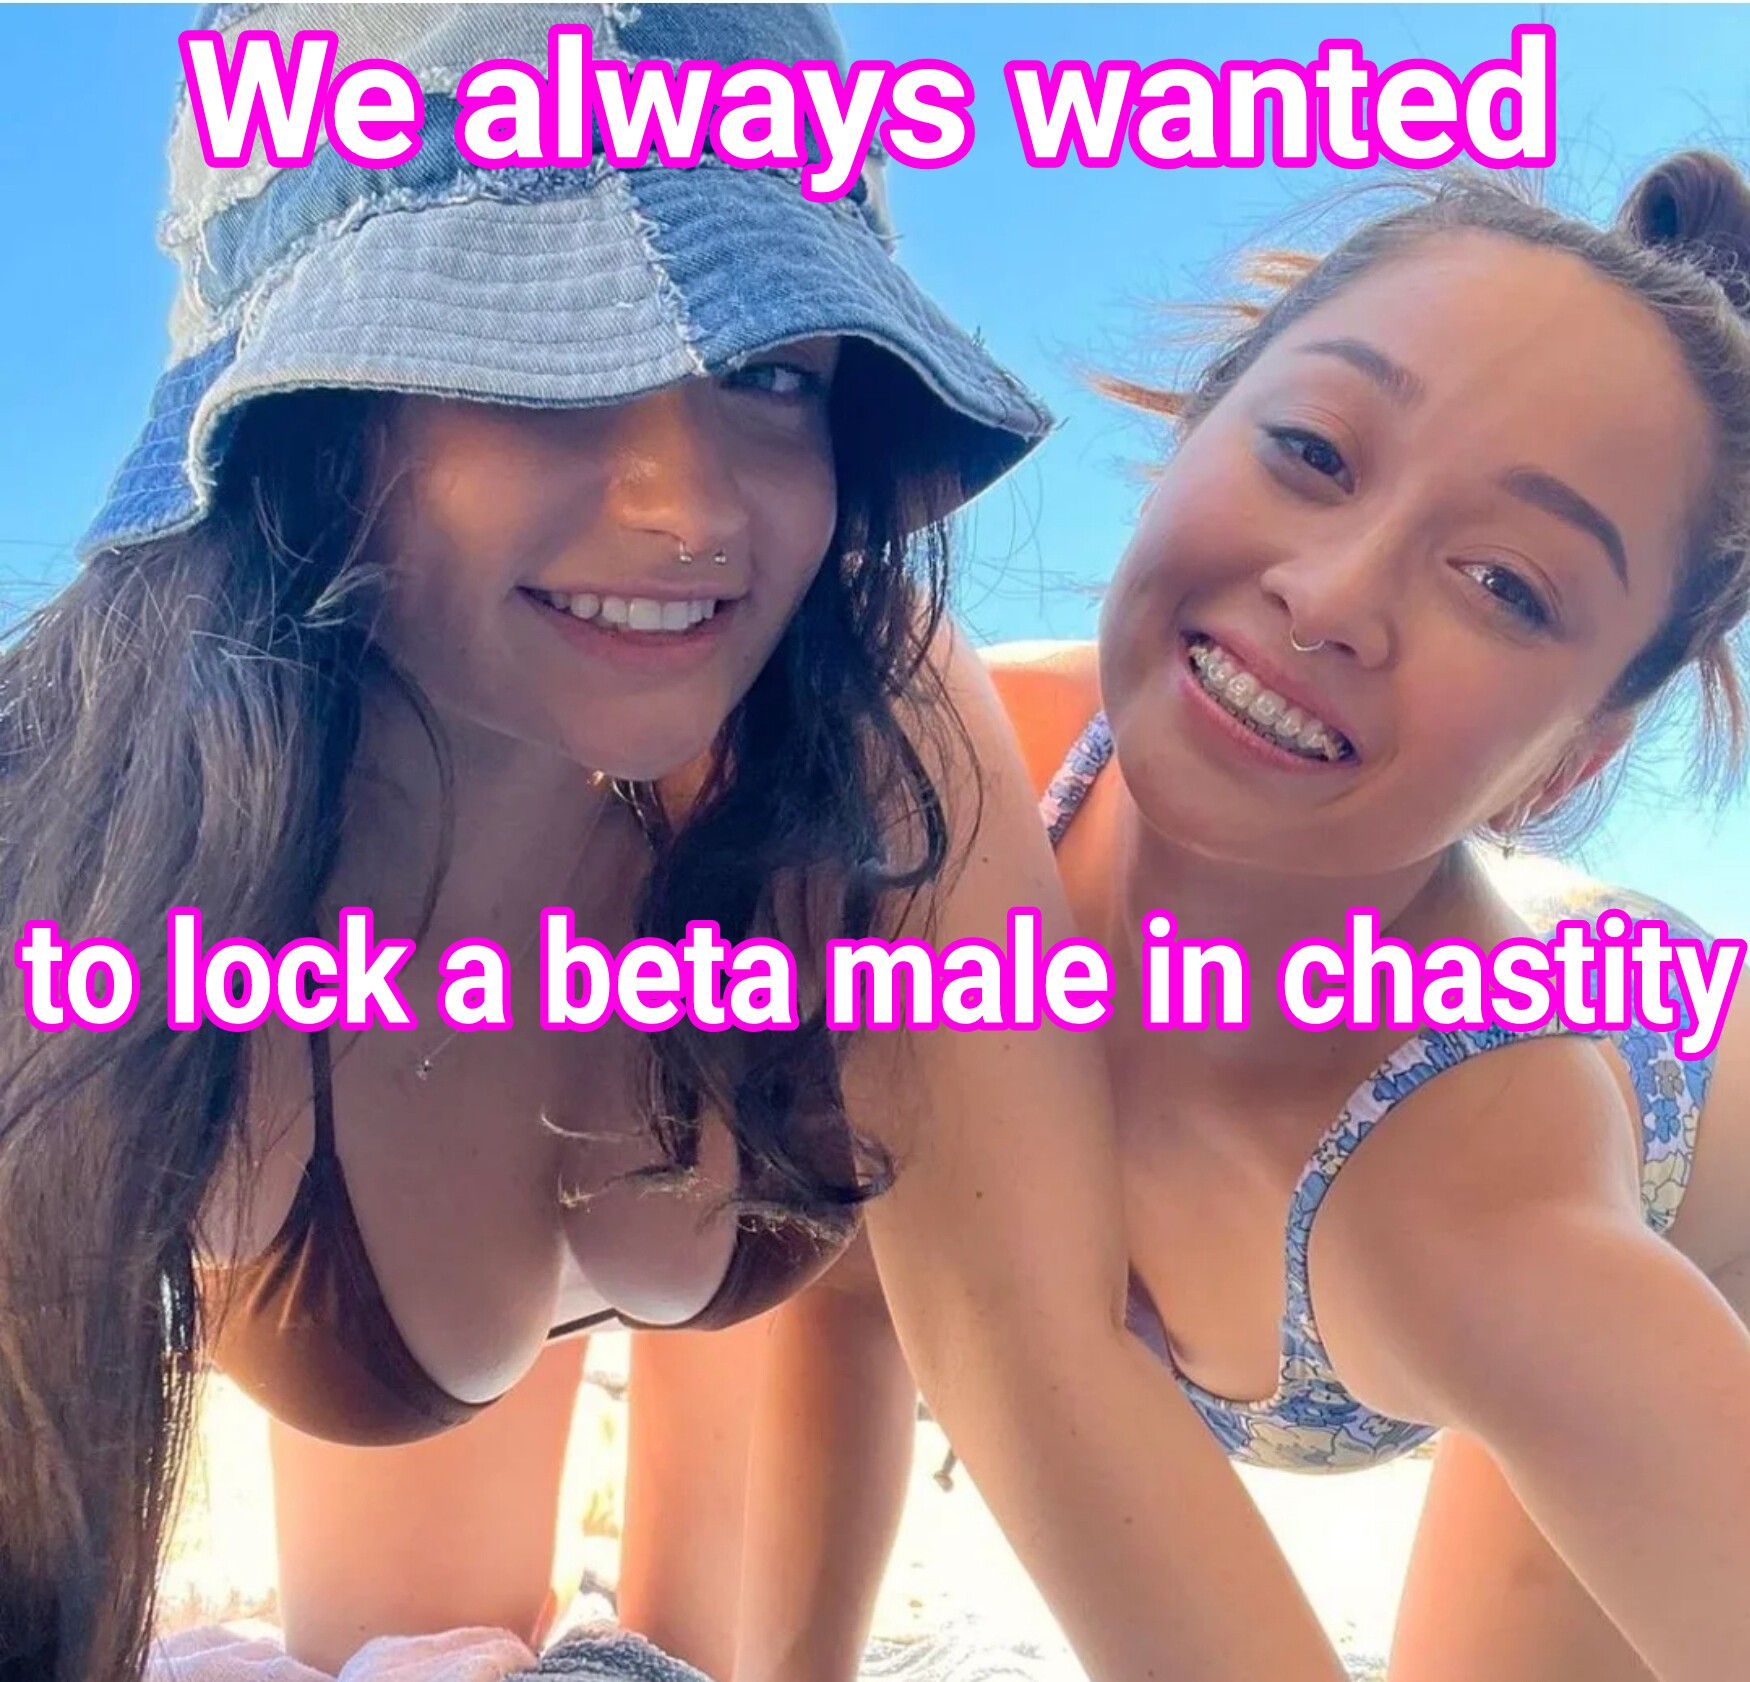 Locking up beta males in chastity - Freakden